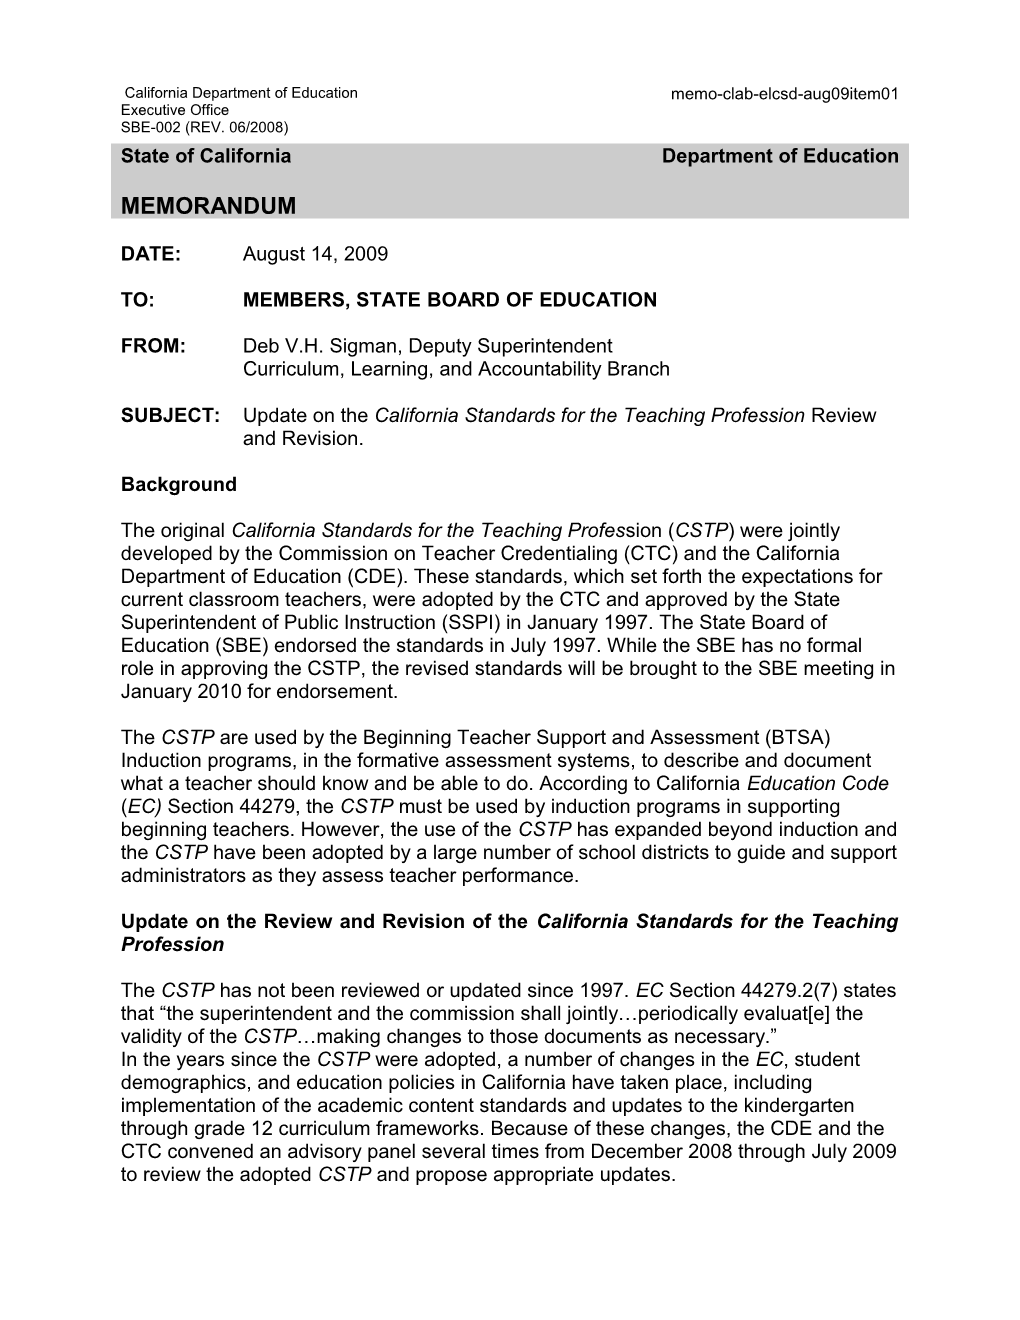 August 2009 CLAB Item 02 - Information Memorandum (CA State Board of Education)